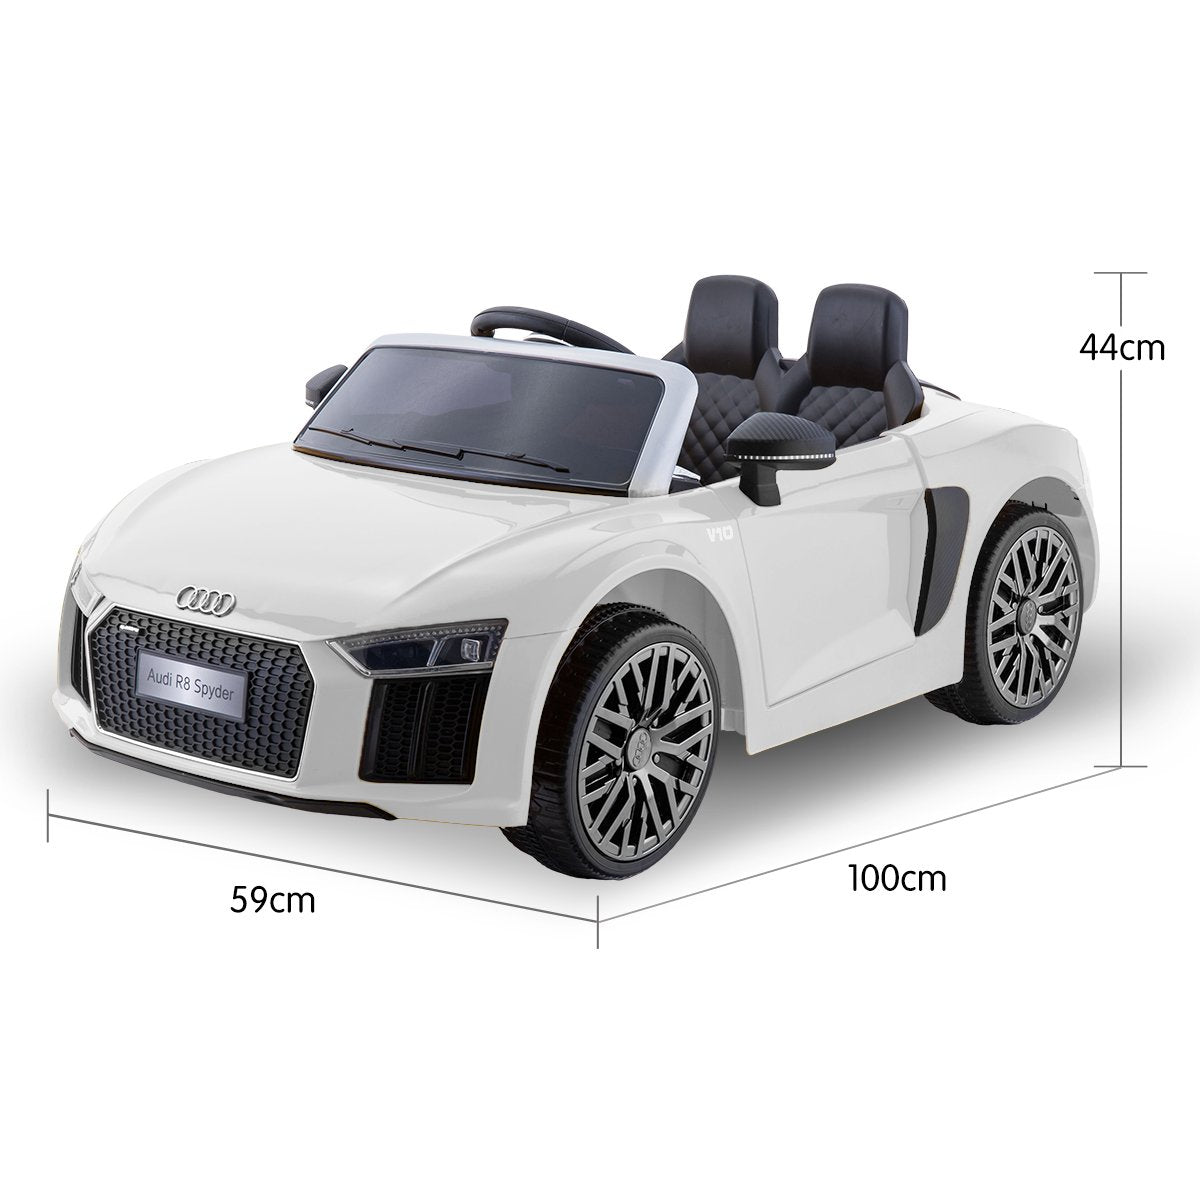 Spyder Audi Licensed Kids Electric Ride On Car Remote Control - White